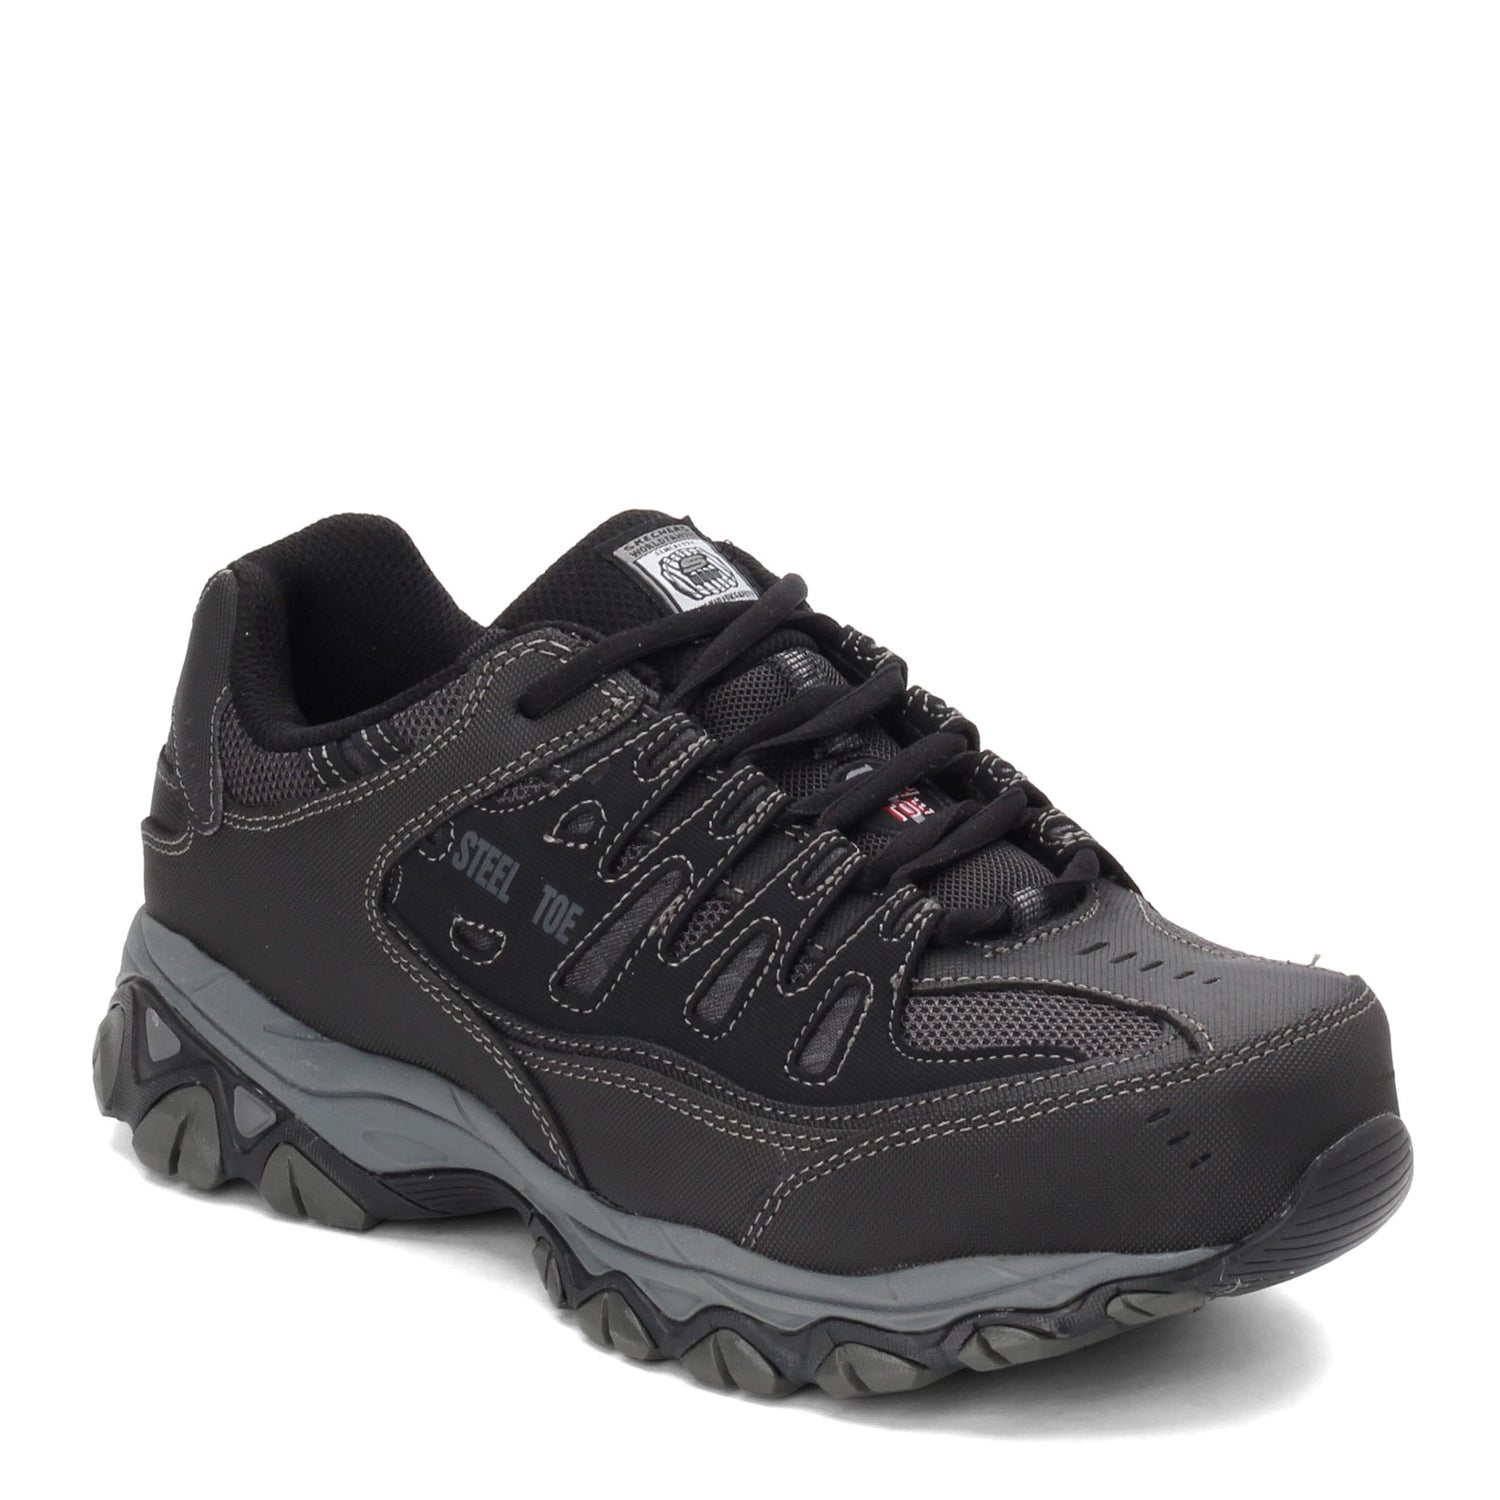 Peltz Shoes  Men's Skechers Relaxed Fit: Cankton ST Work Shoe - Wide Width Black/Charcoal 77055W-BKCC